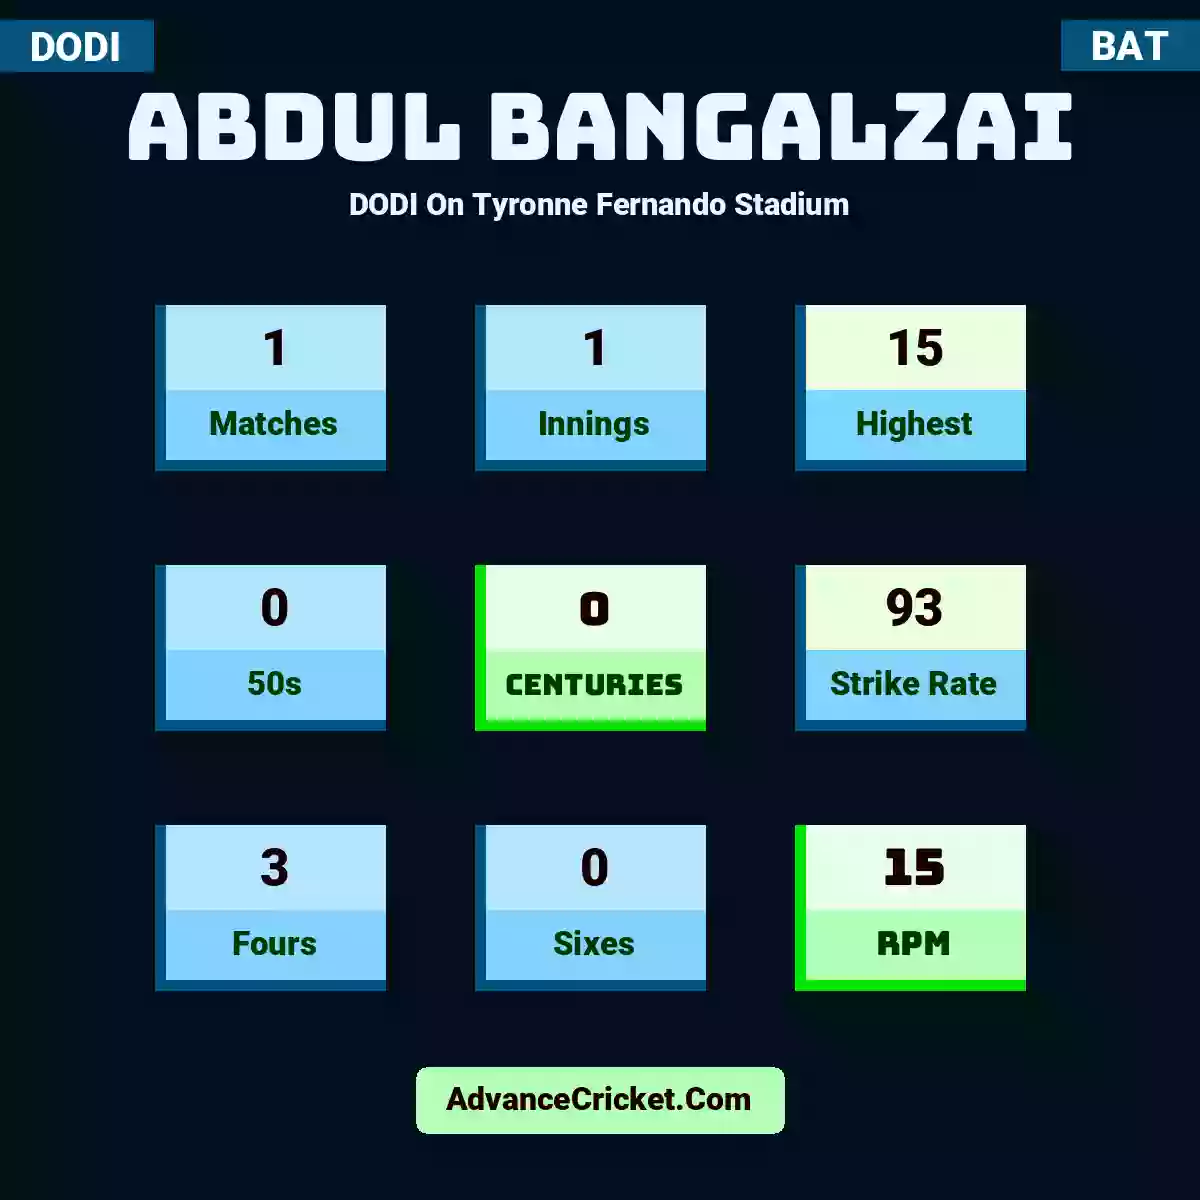 Abdul Bangalzai DODI  On Tyronne Fernando Stadium, Abdul Bangalzai played 1 matches, scored 15 runs as highest, 0 half-centuries, and 0 centuries, with a strike rate of 93. A.Bangalzai hit 3 fours and 0 sixes, with an RPM of 15.